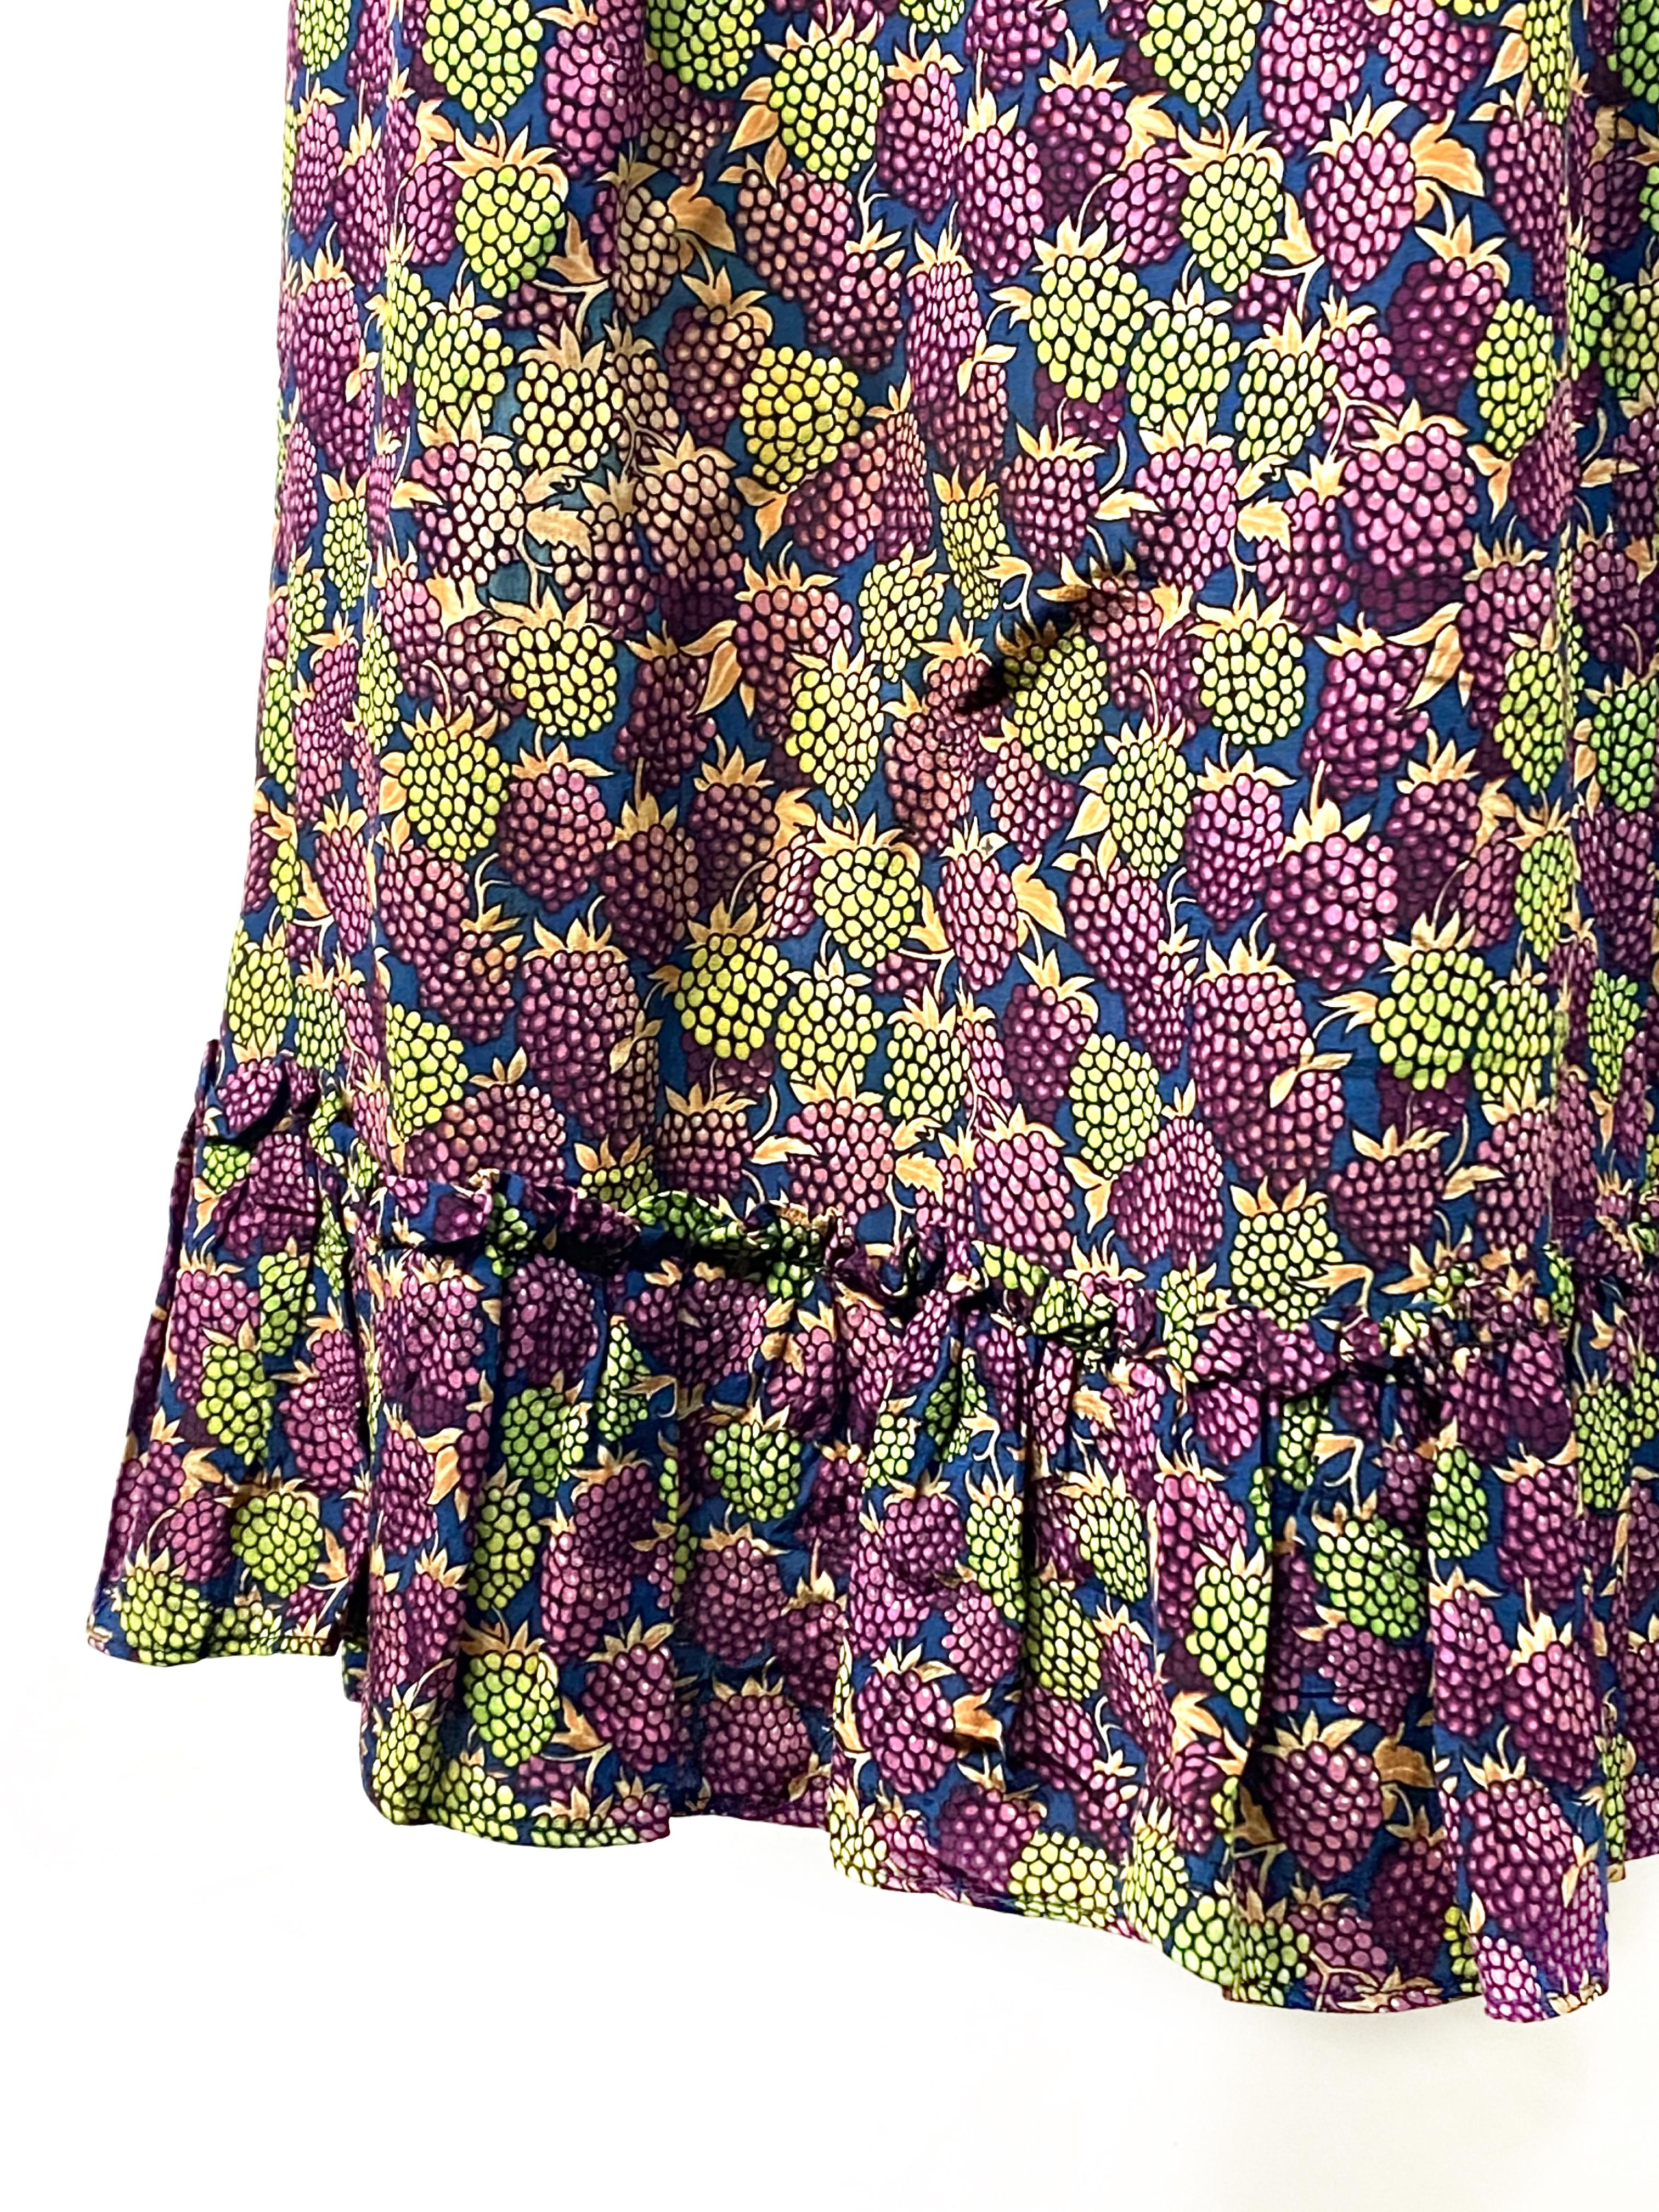 Emanuel Ungaro Parallele Paris Multi Color Raspberry Print Dress 3